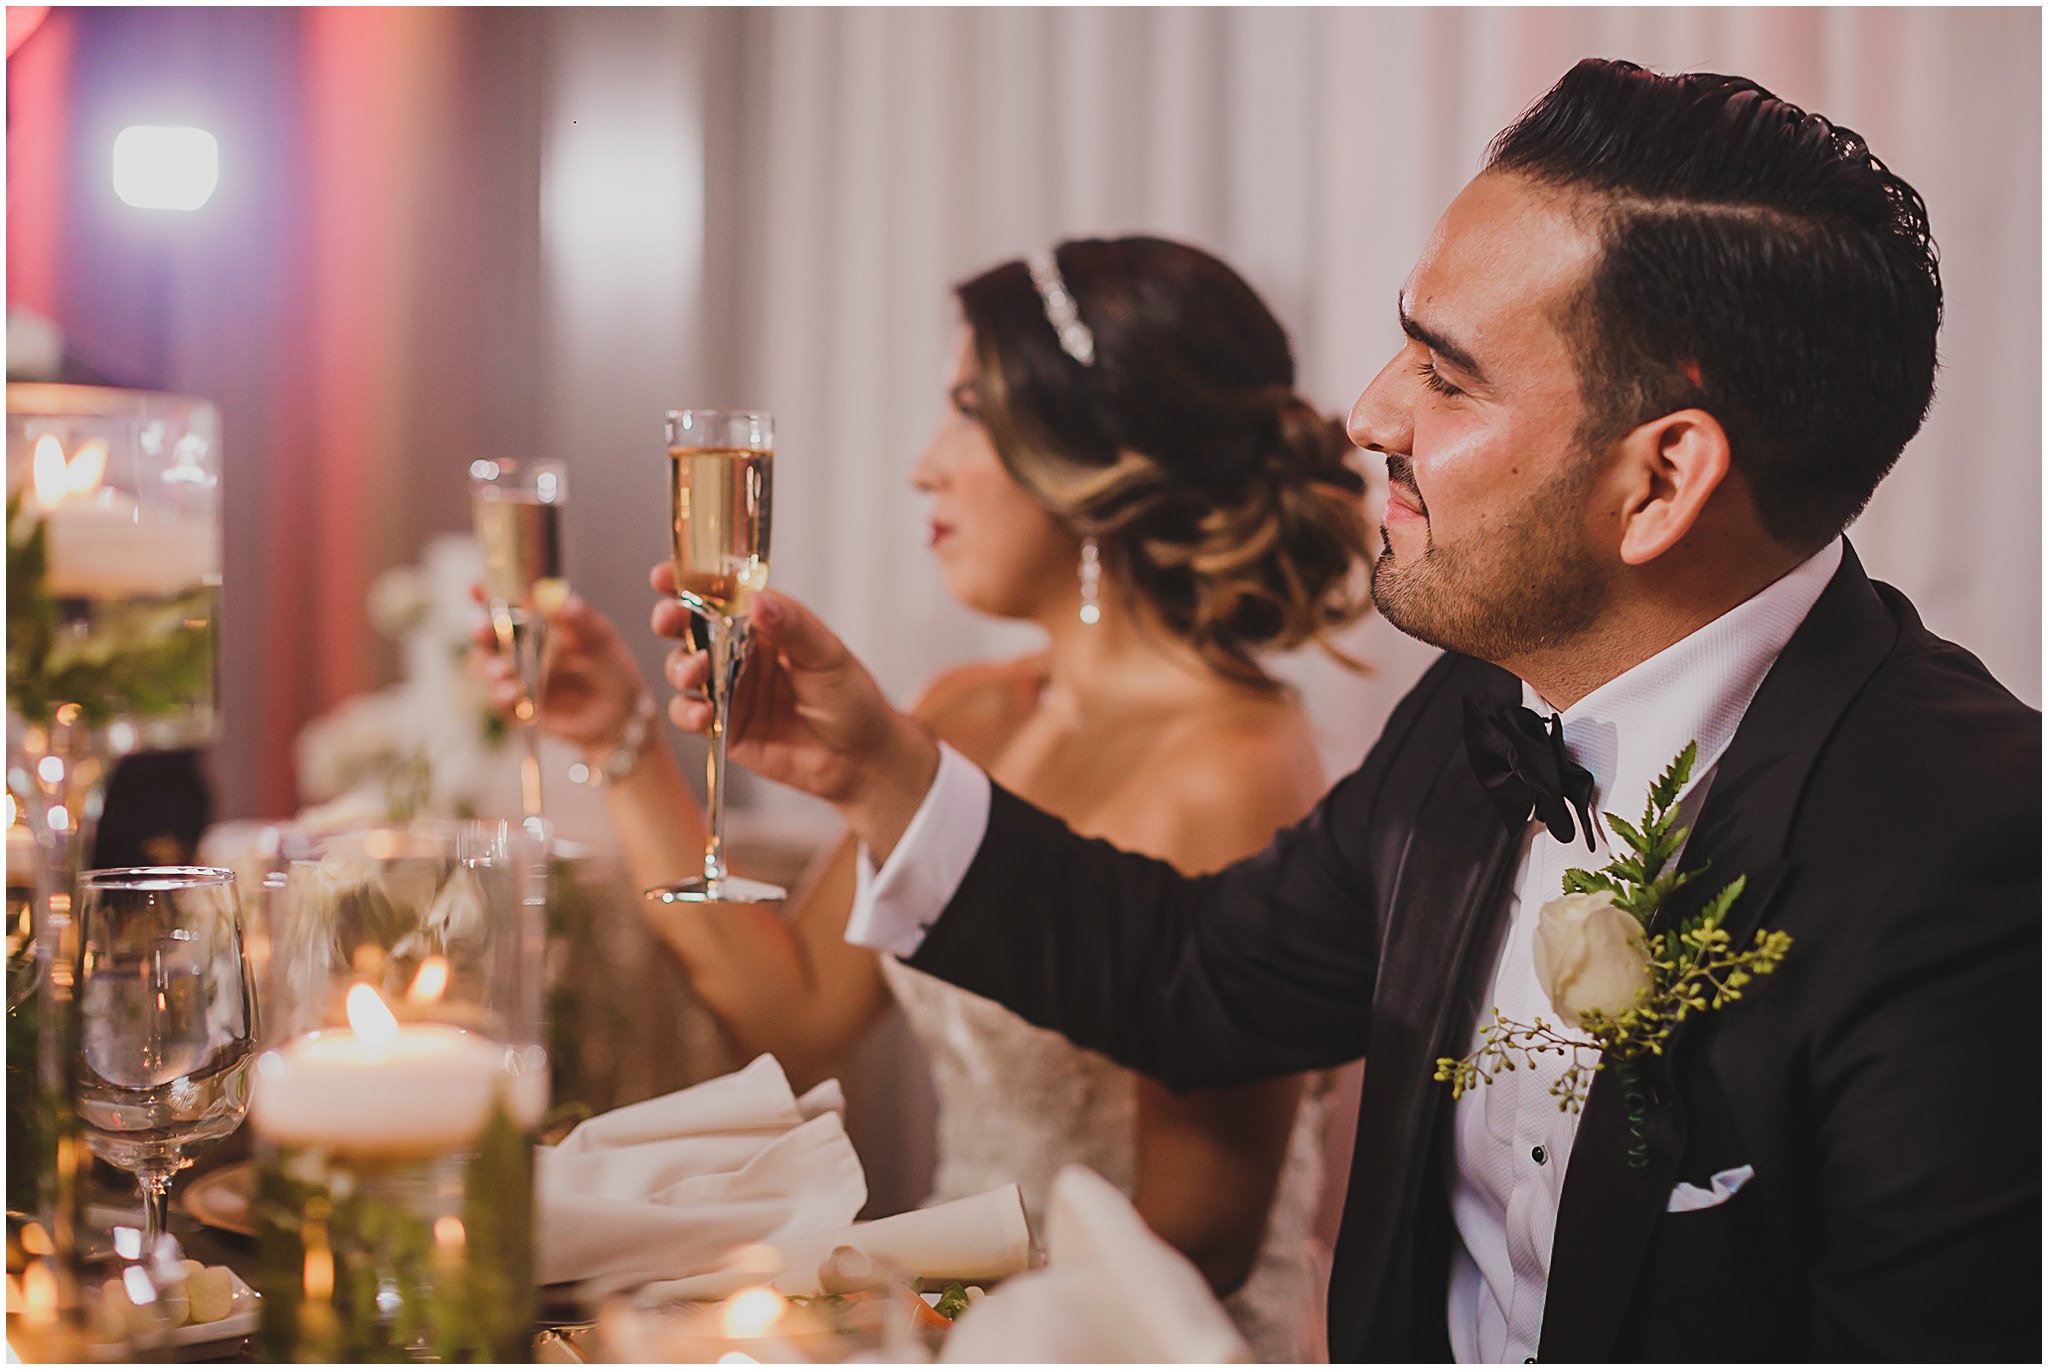 champaign wedding toast